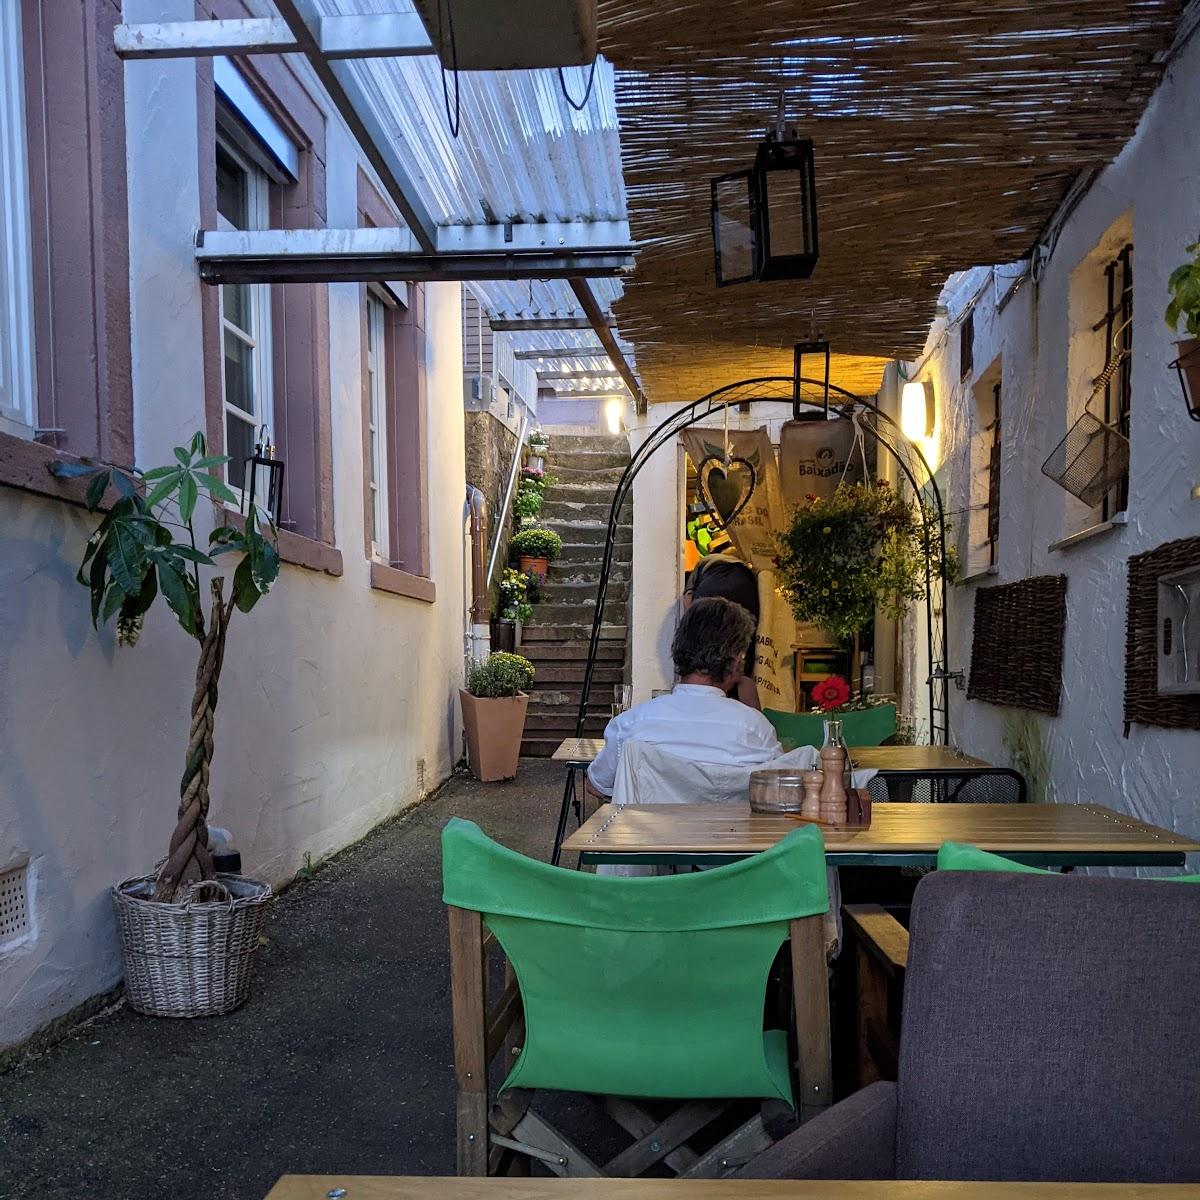 Restaurant "Restaurant-Hotel Tomahawk" in Baiersbronn